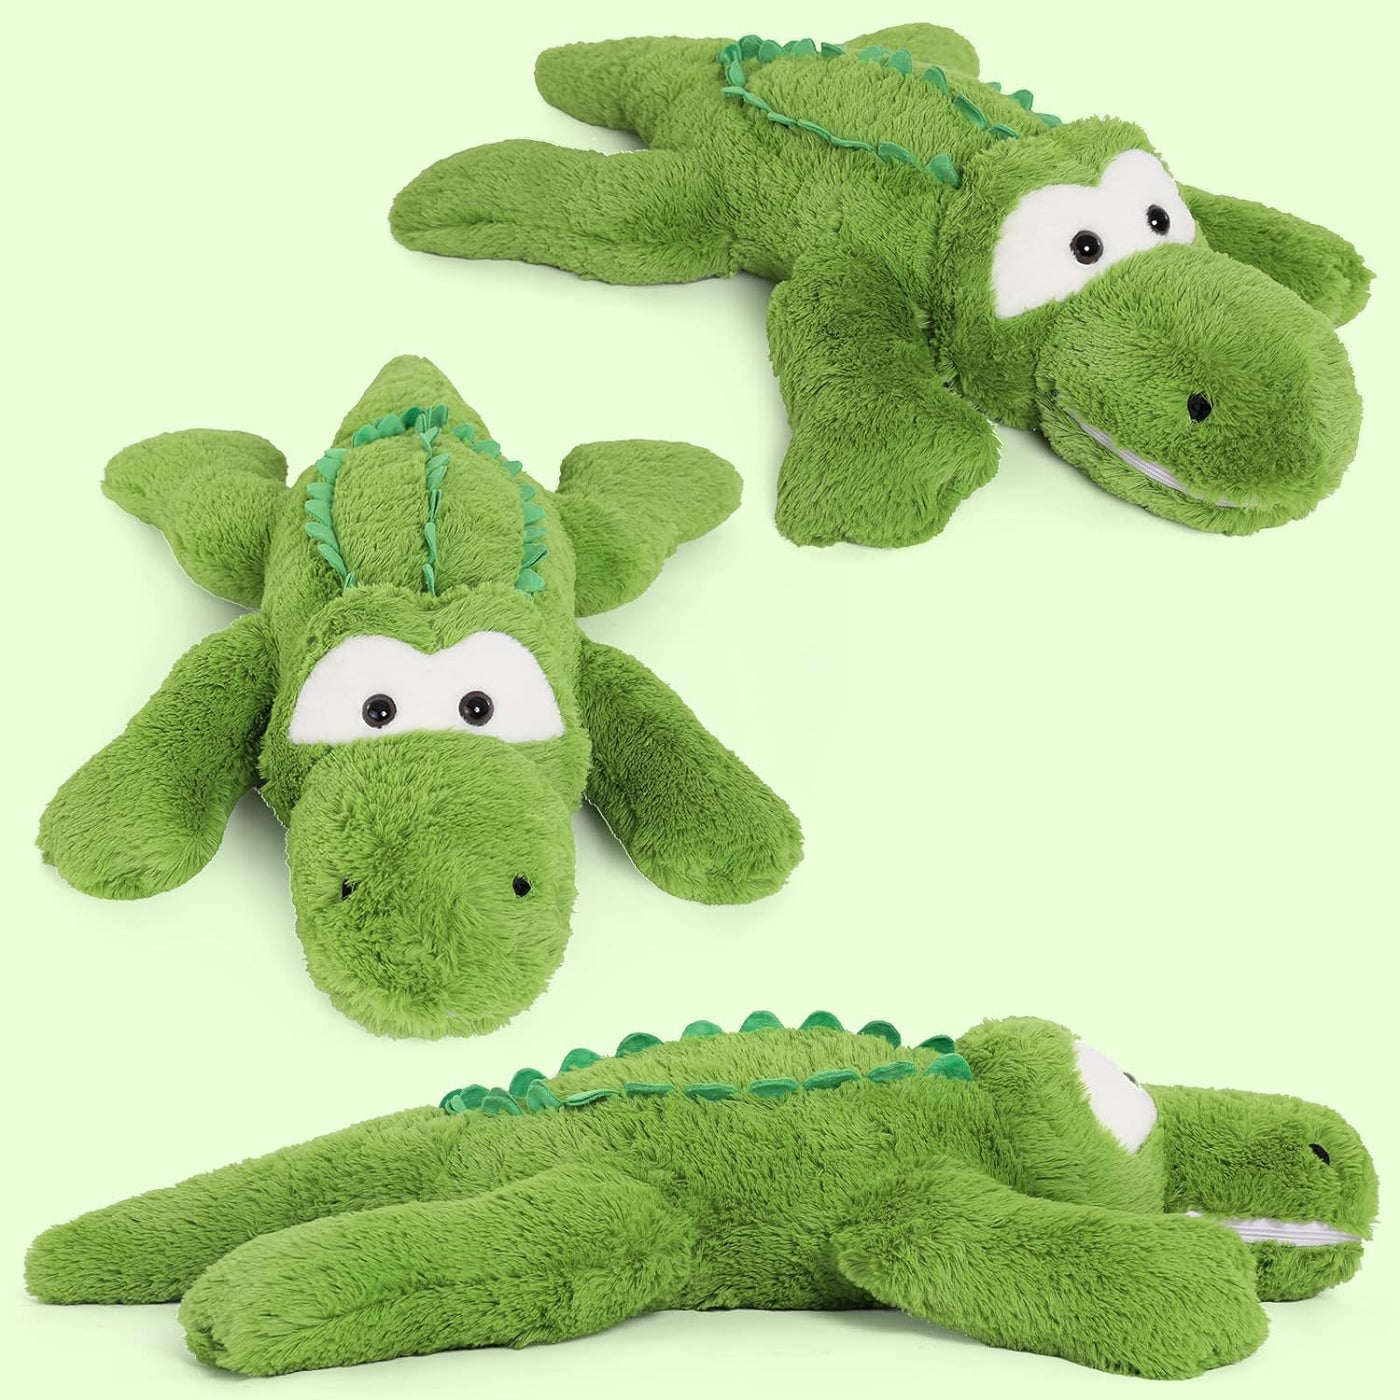 Alligator Plush Toy Set, Green, 36 Inches - MorisMos Stuffed Animals